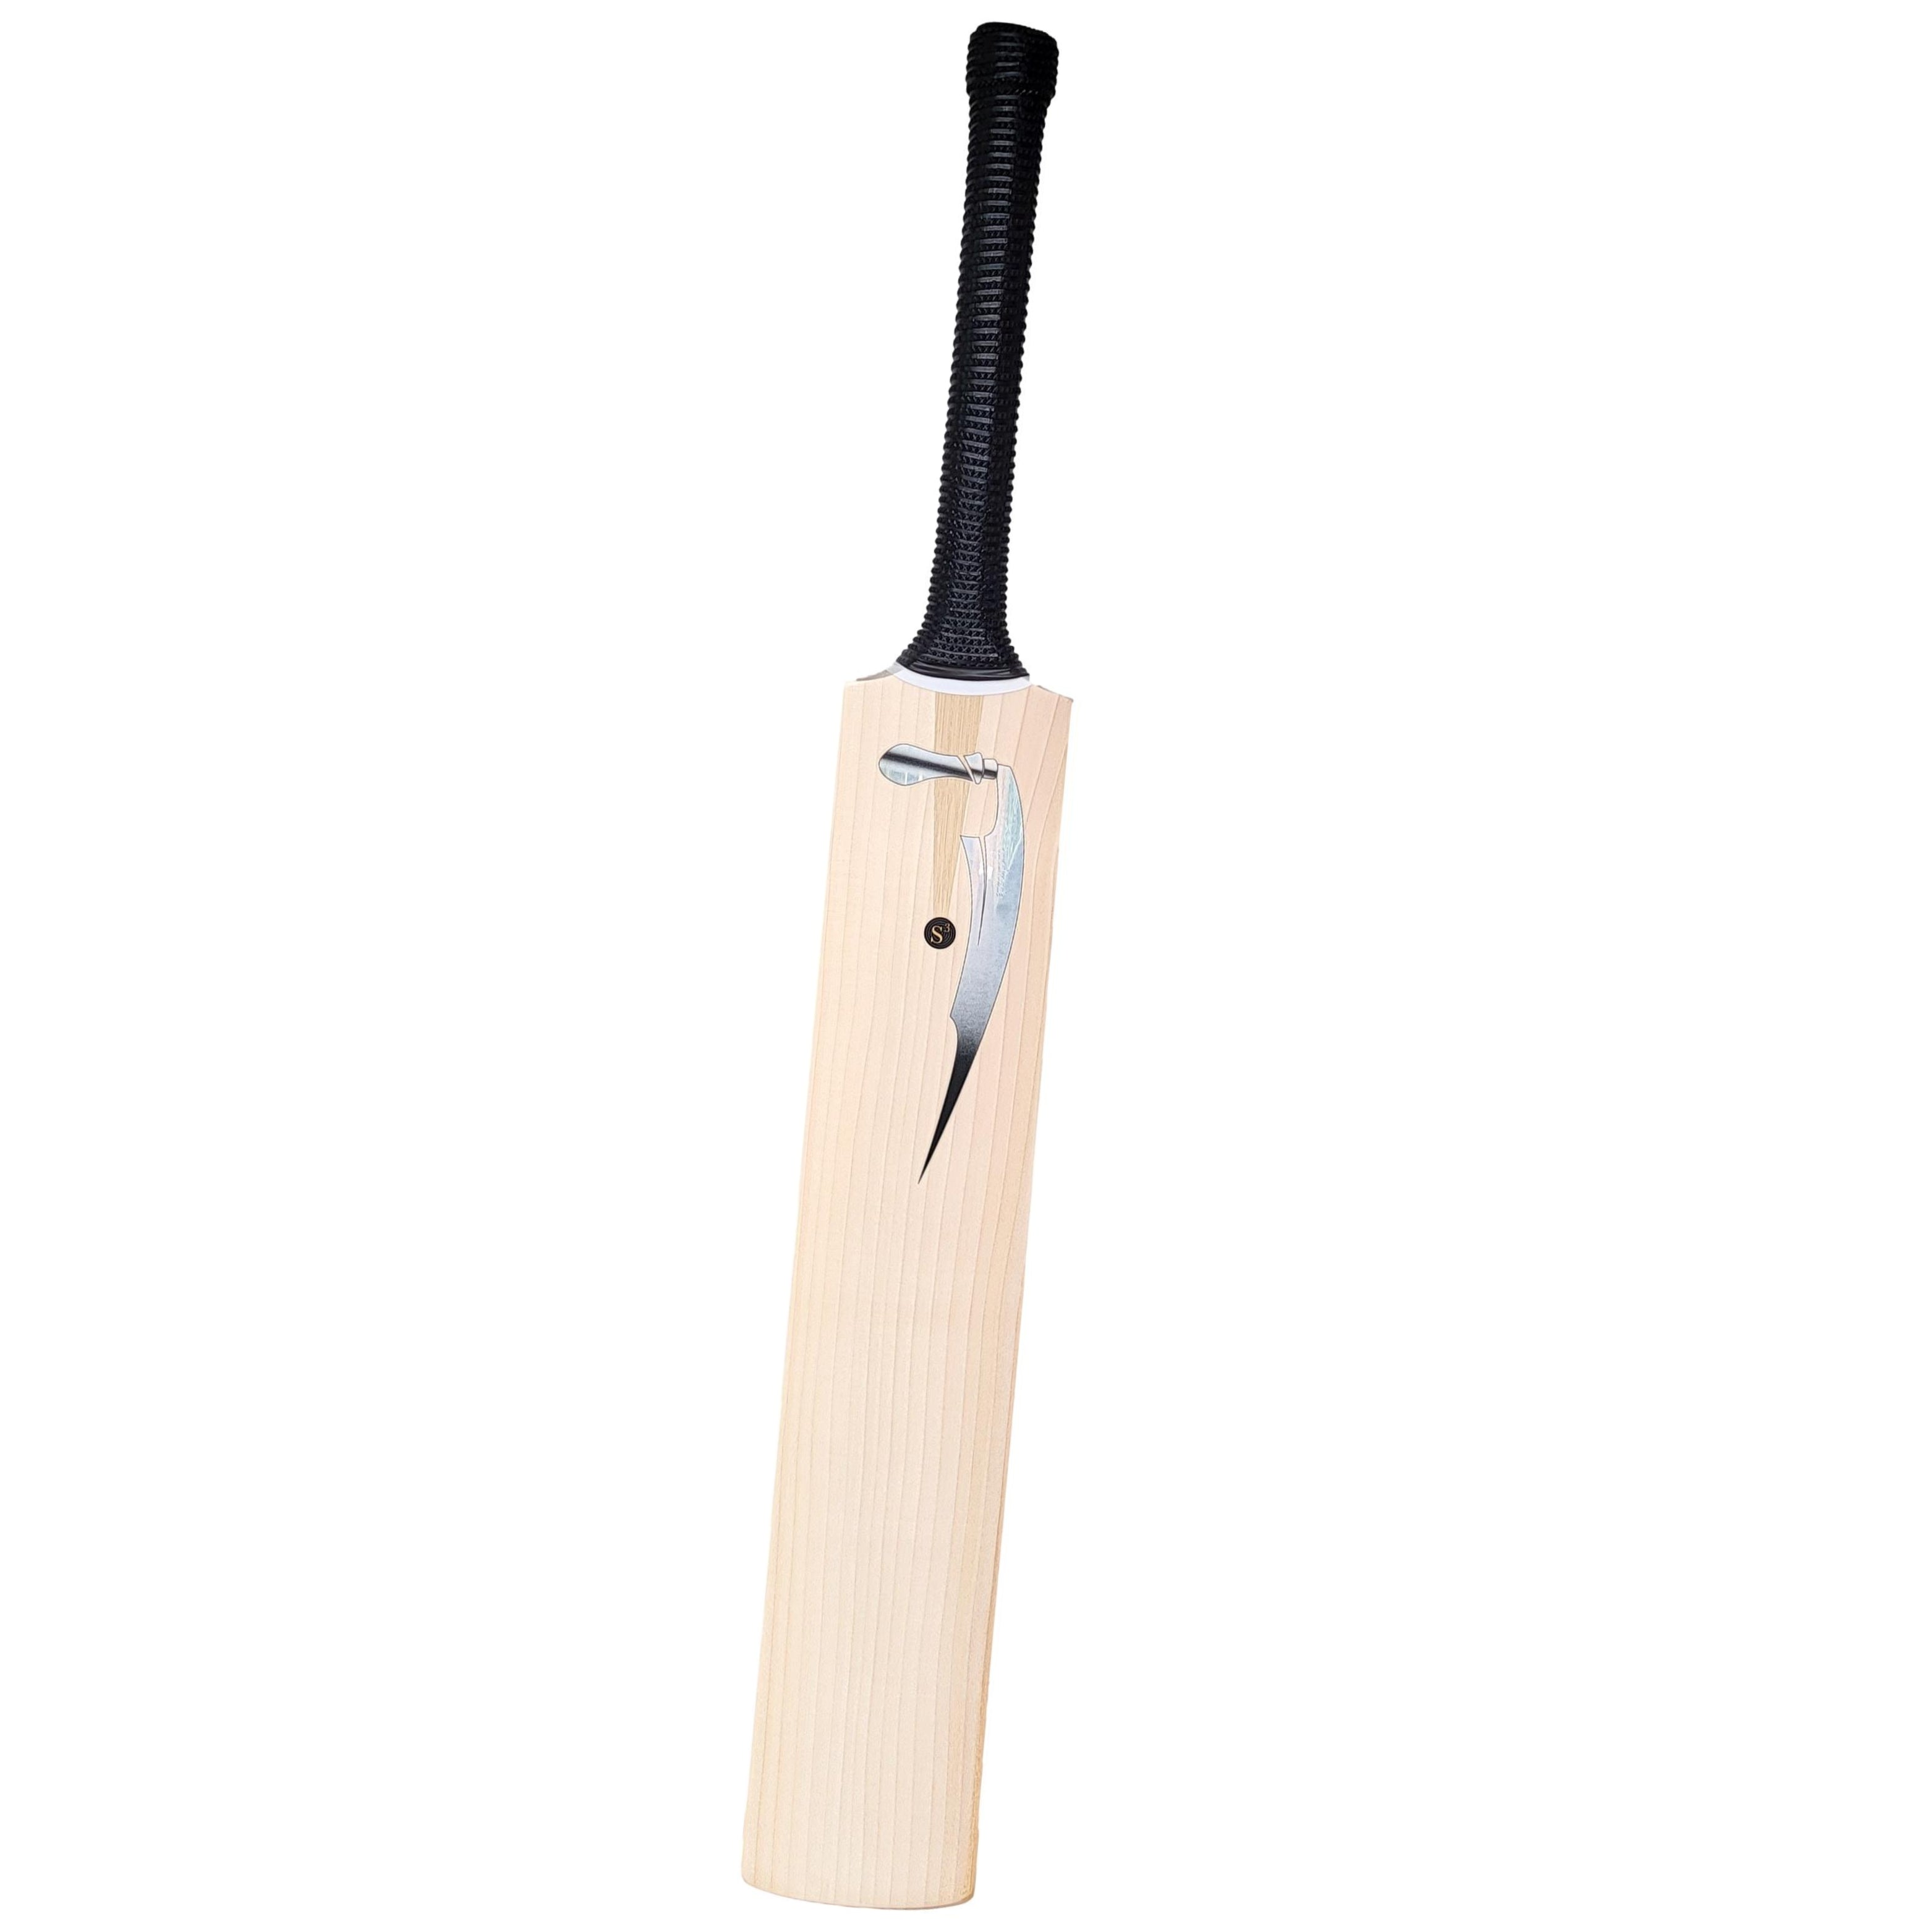 SALIX AJK KNIFE Finite English Willow Cricket Bat Short Handle SH